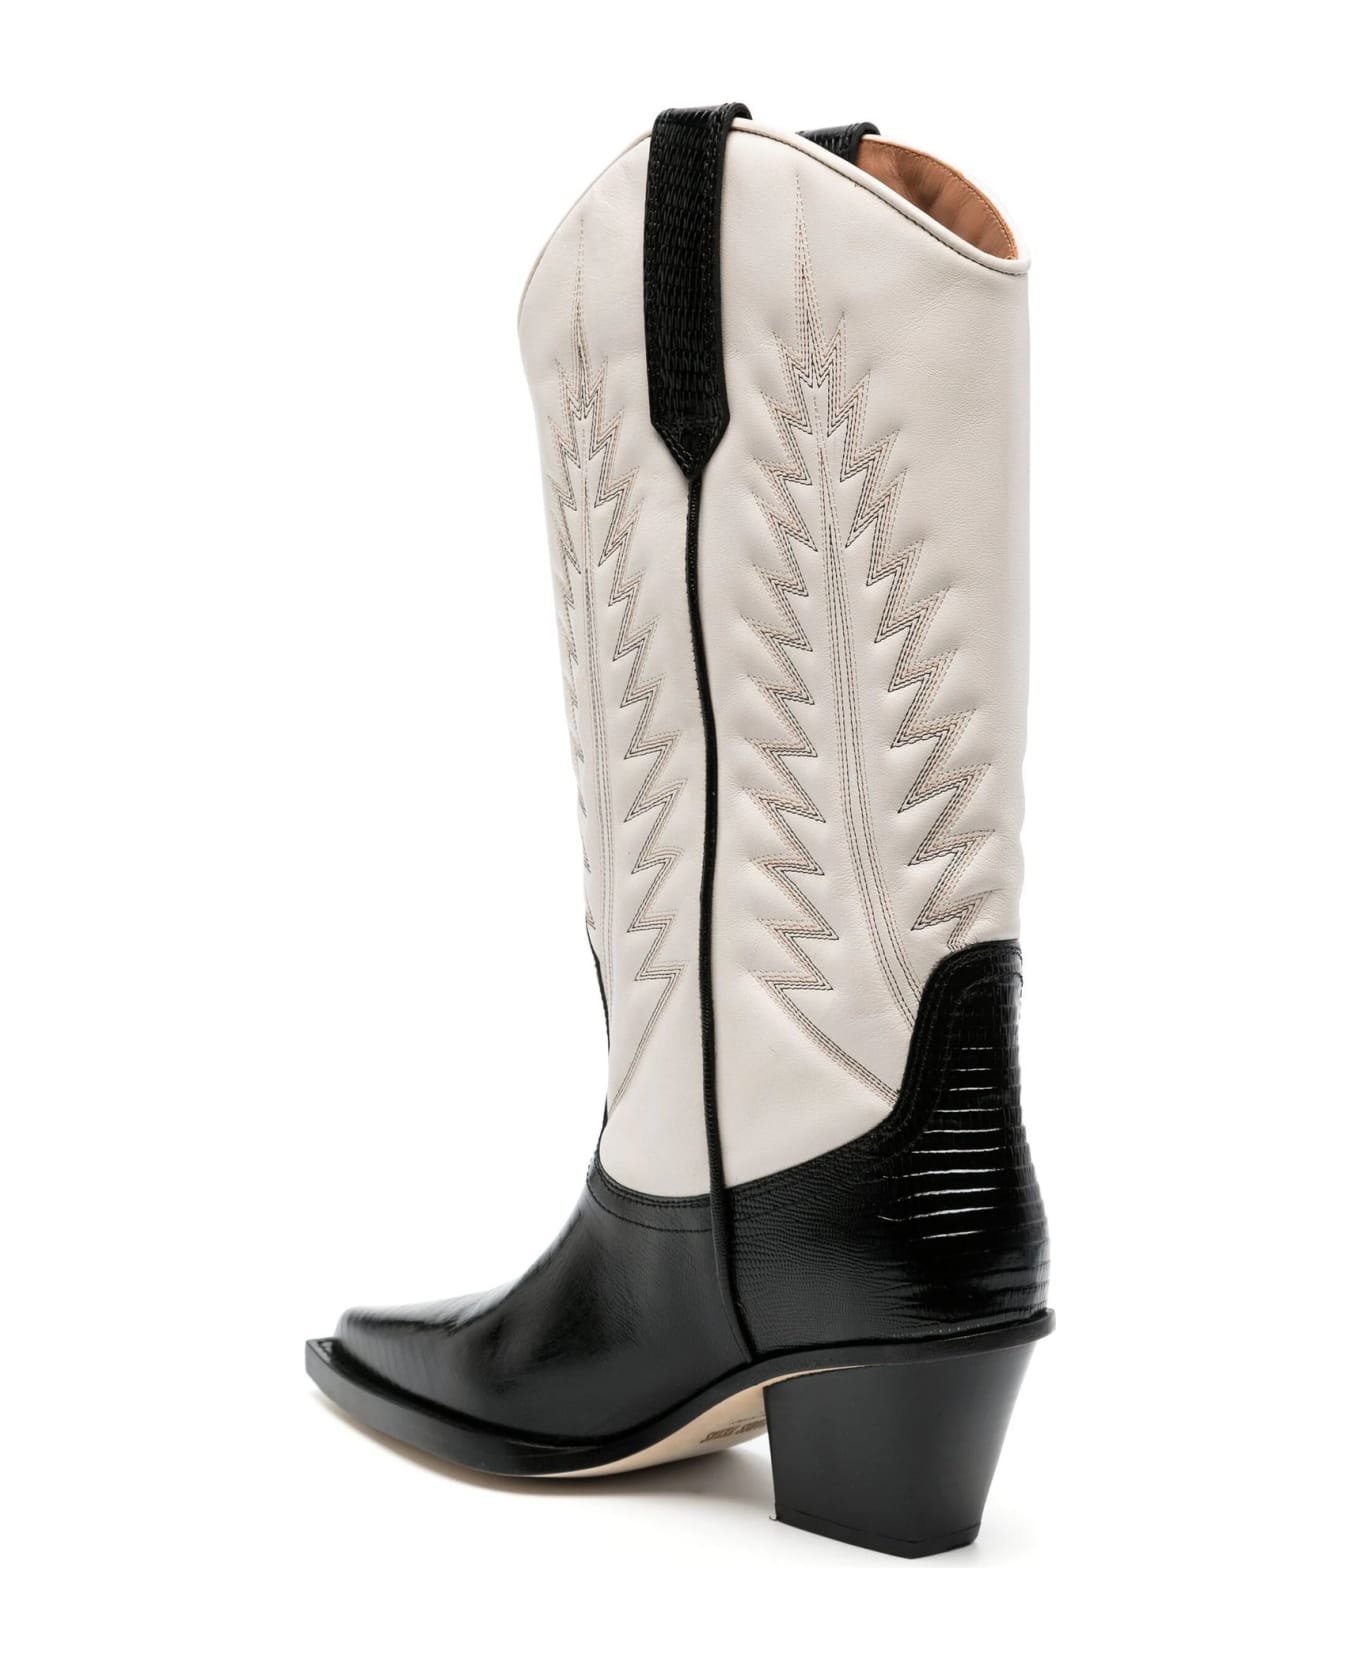 Paris Texas Bone White And Black Calf Leather Boots - White